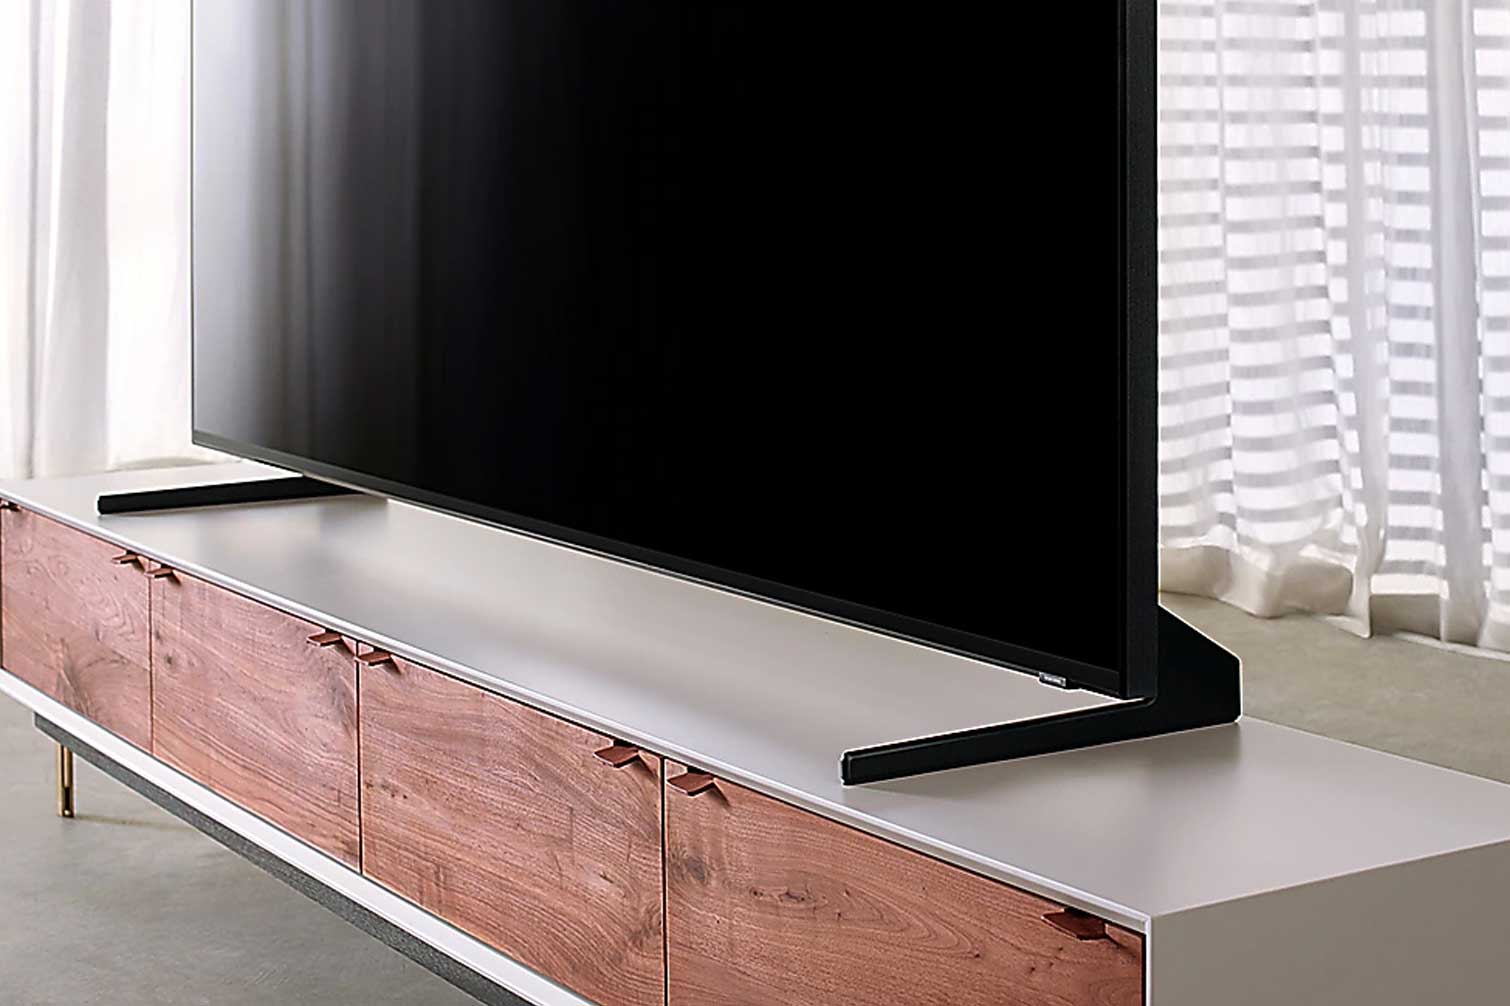 QLED Tivi 8K Samsung 65Q900R 65 inch Smart TV